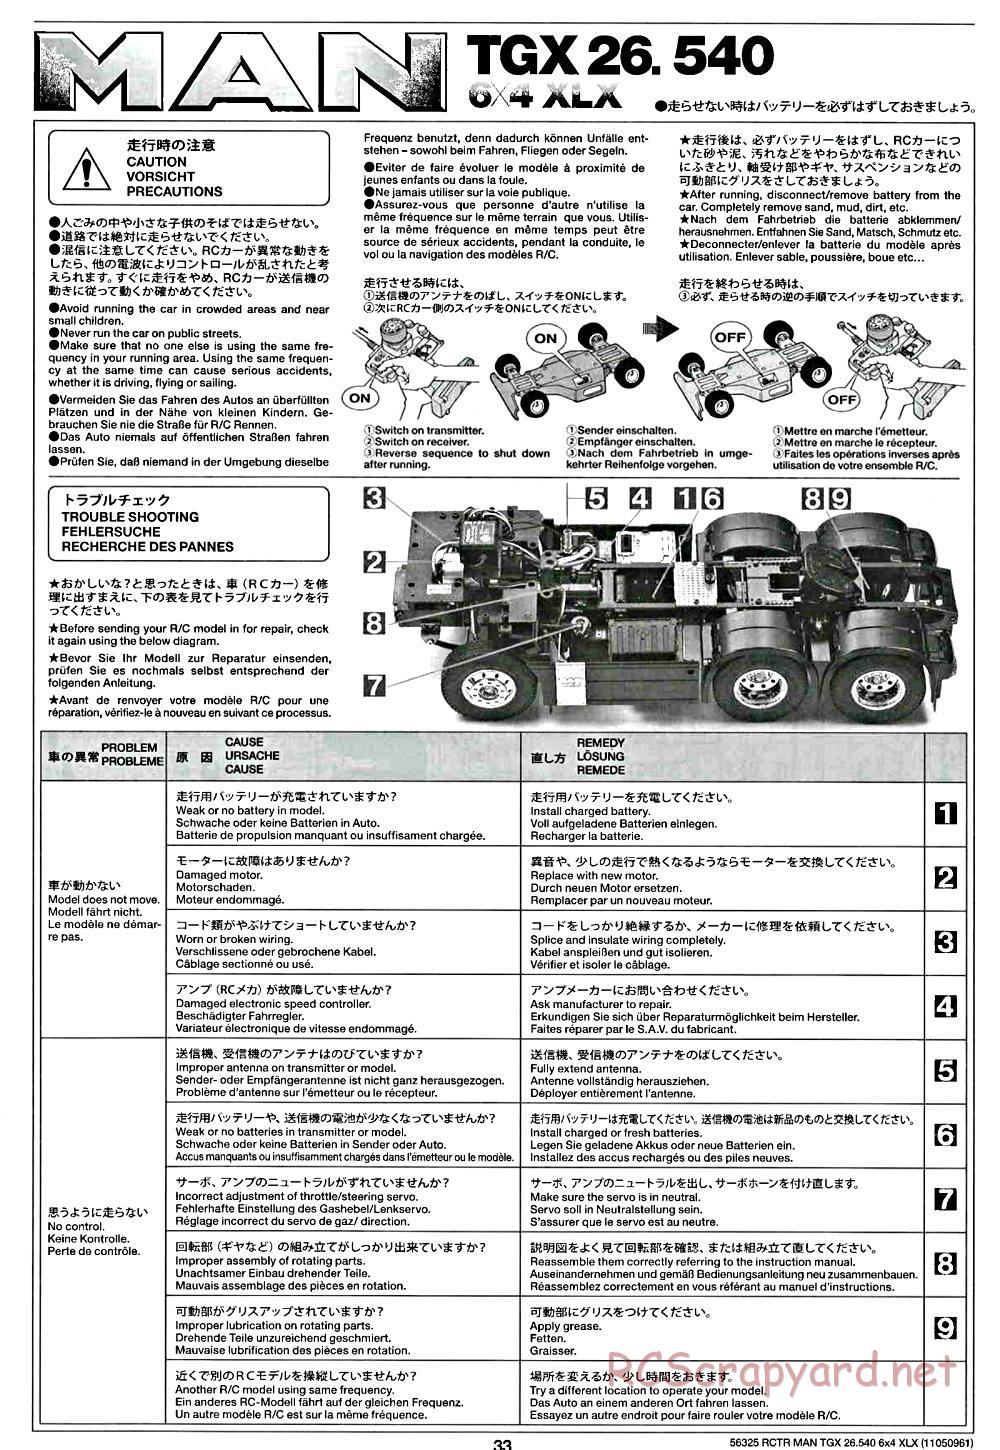 Tamiya - MAN TGX 26.540 6x4 XLX Tractor Truck Chassis - Manual - Page 33